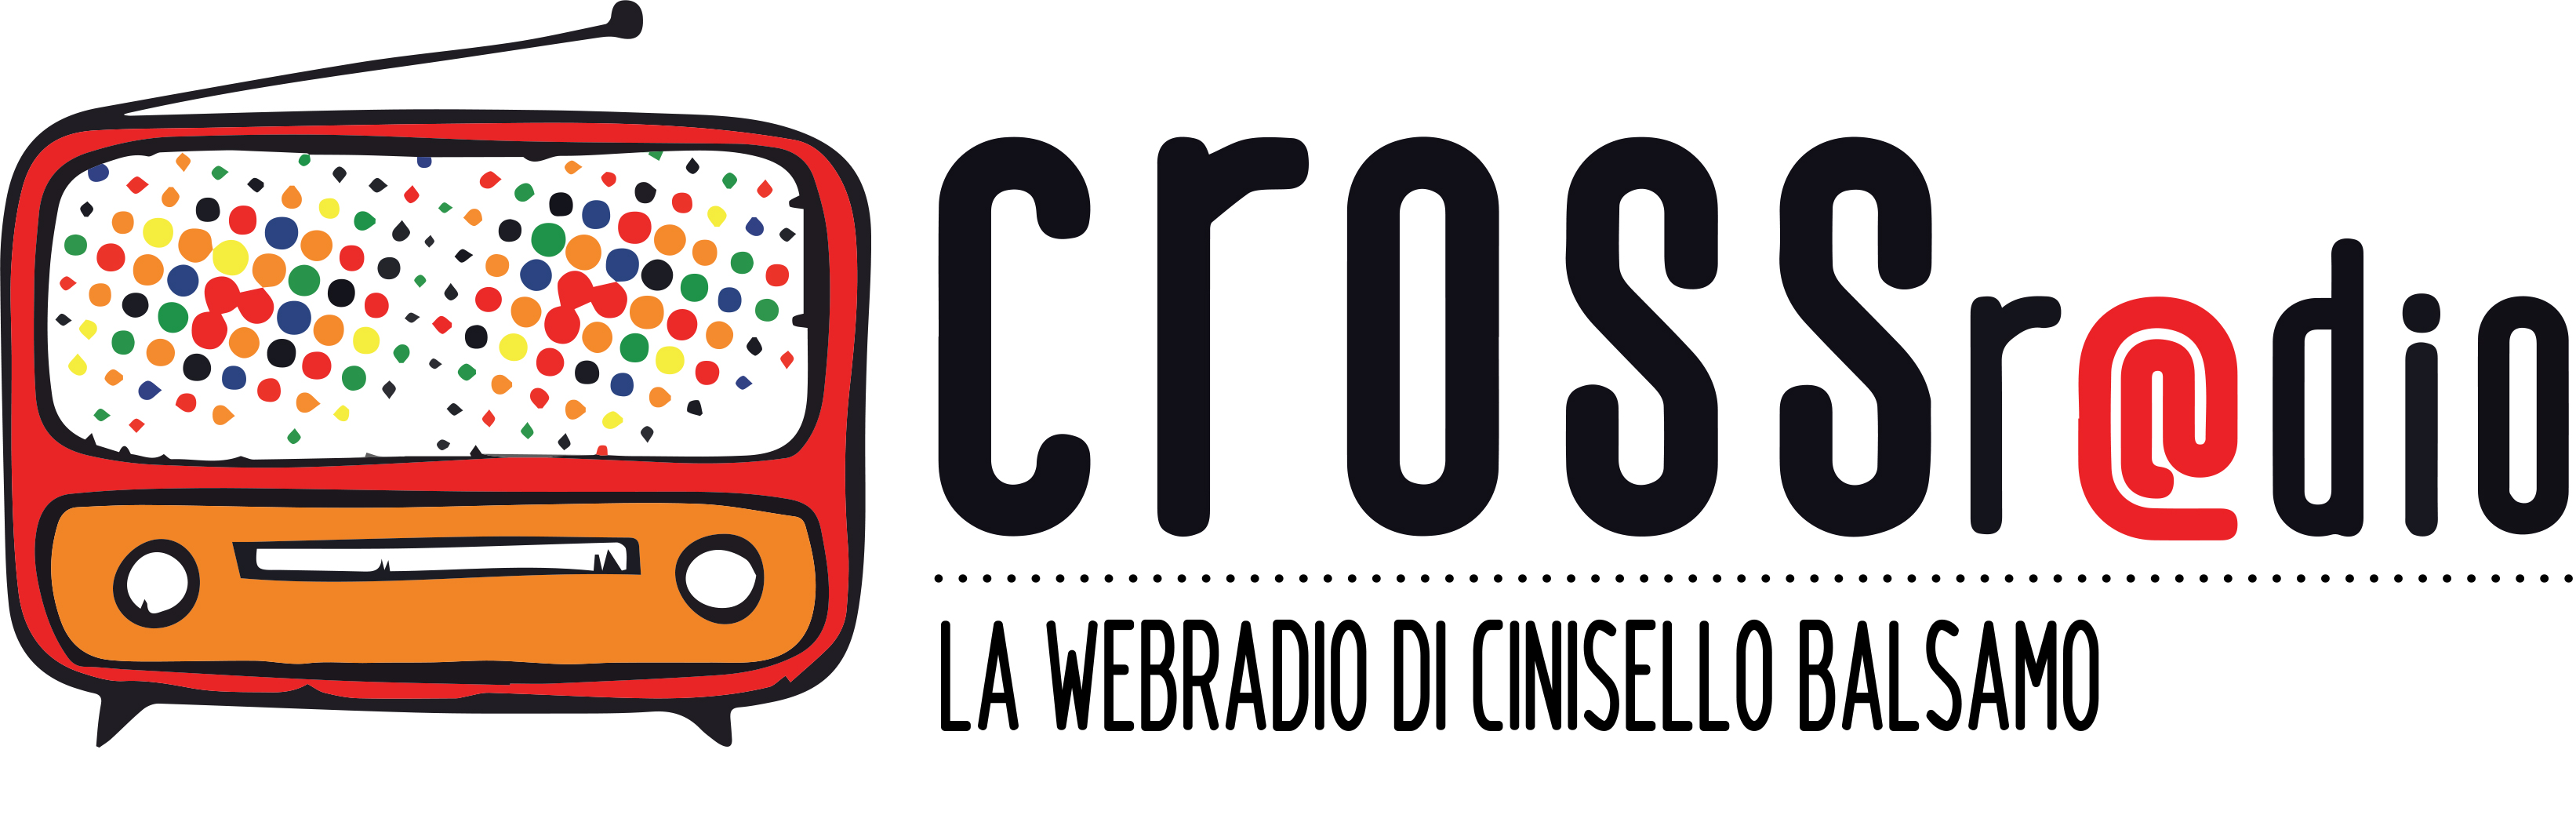 CrossRadio